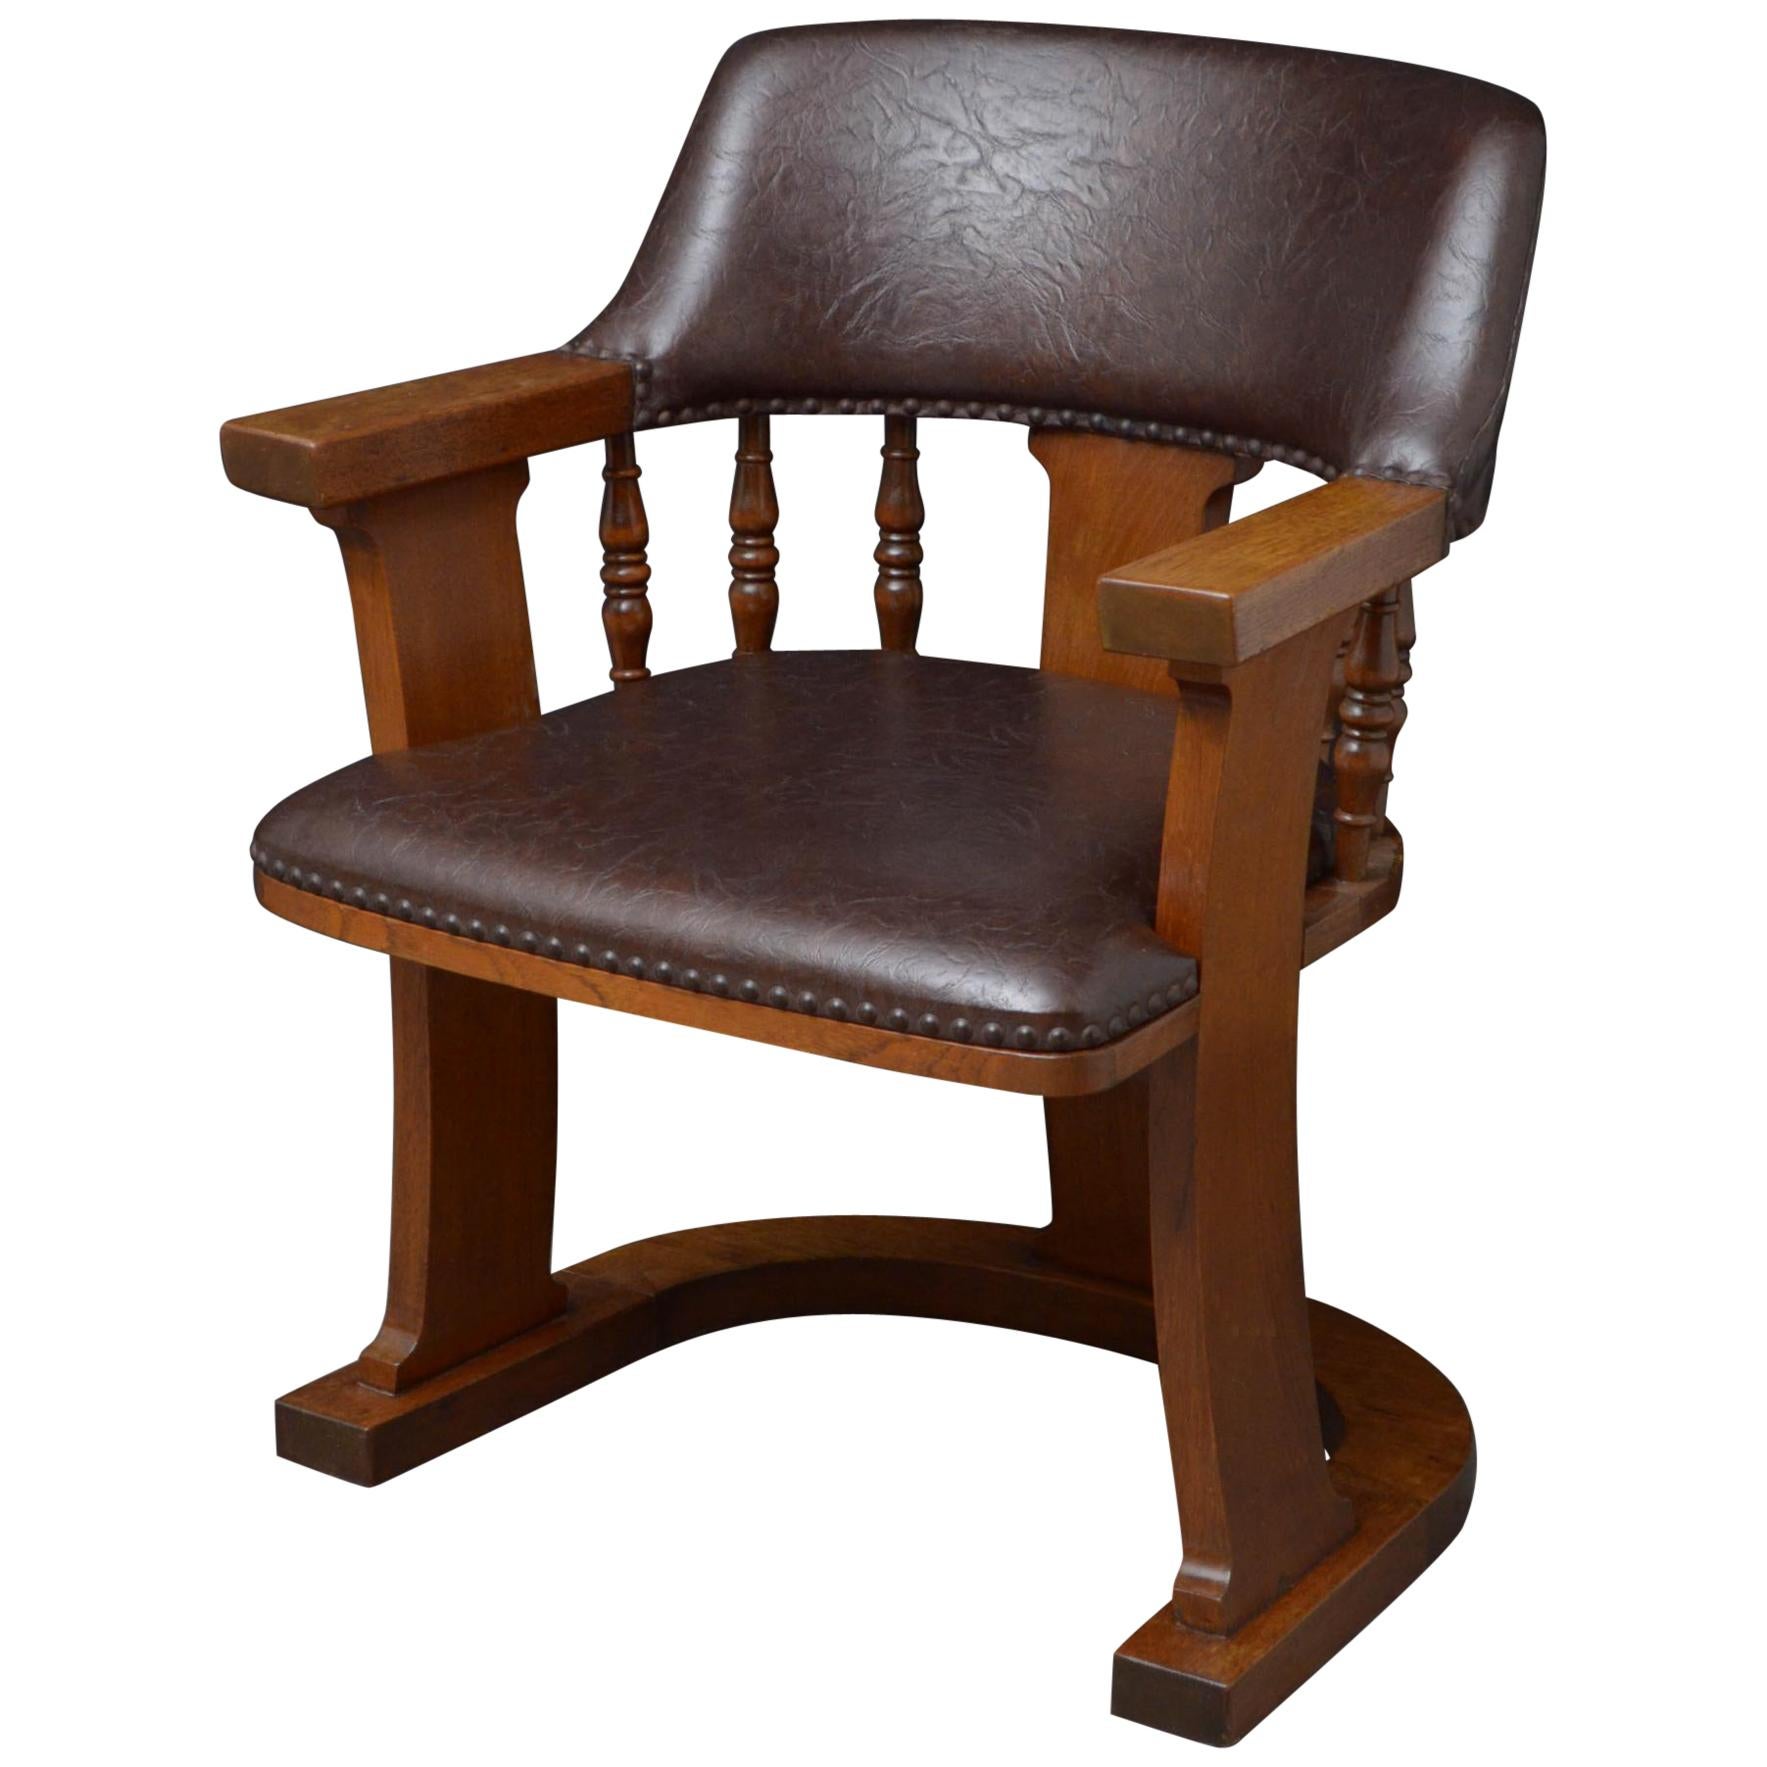 Unusual Arts & Crafts Oak Desk Chair